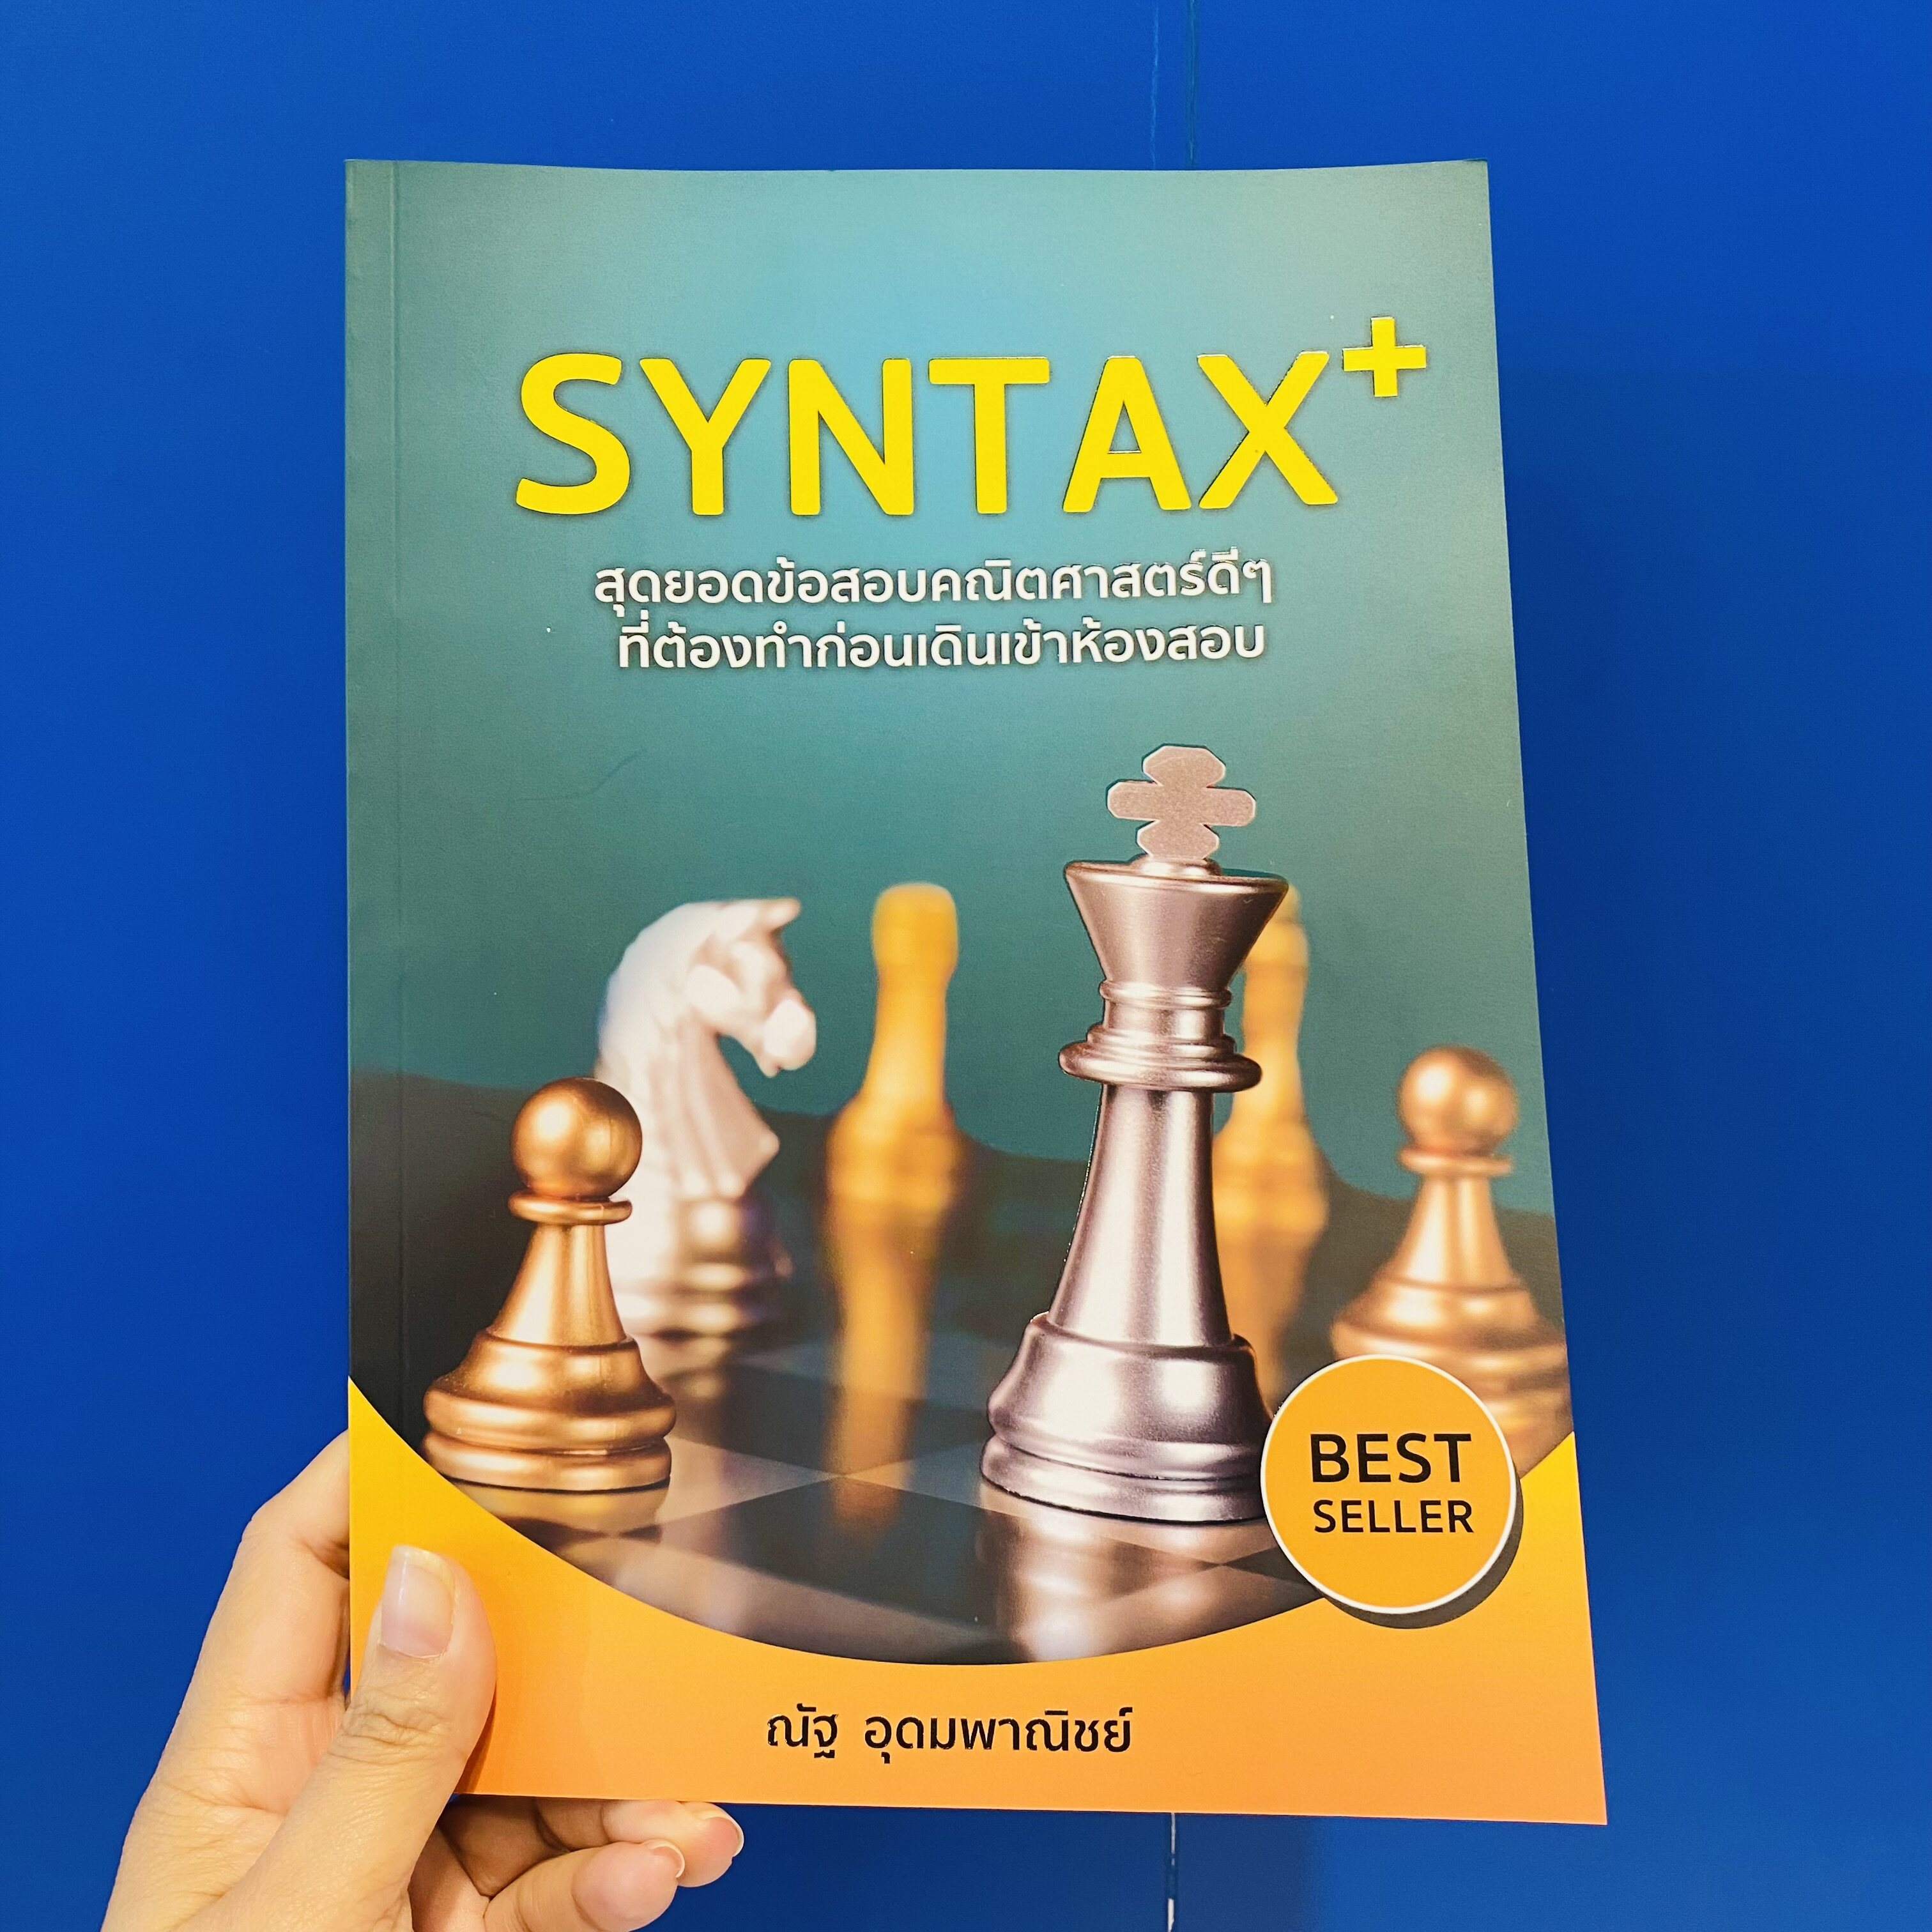 SYNTAX+ สุดยอดข้อสอบคณิตศาสตร์ดีๆ ที่ต้องทำก่อนเดินเข้าห้องสอบ | Lazada.co.th